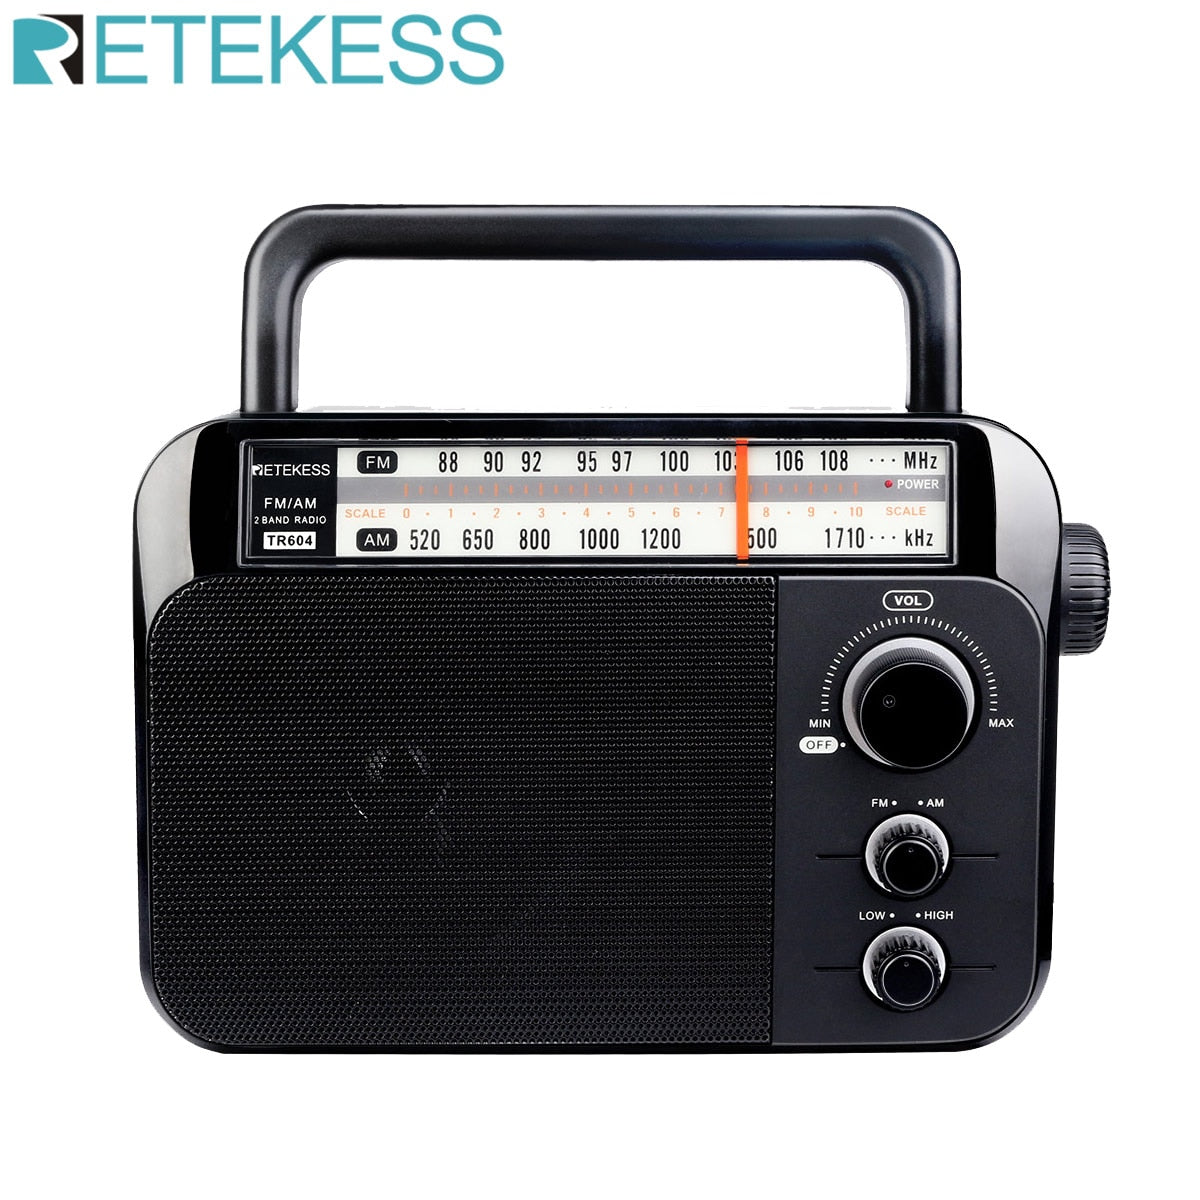 Retekess TR604 AM FM Radio Portable Plug in Radio Transistor Powered by 3 D Batteries or AC 110V/220V for Senior and Home